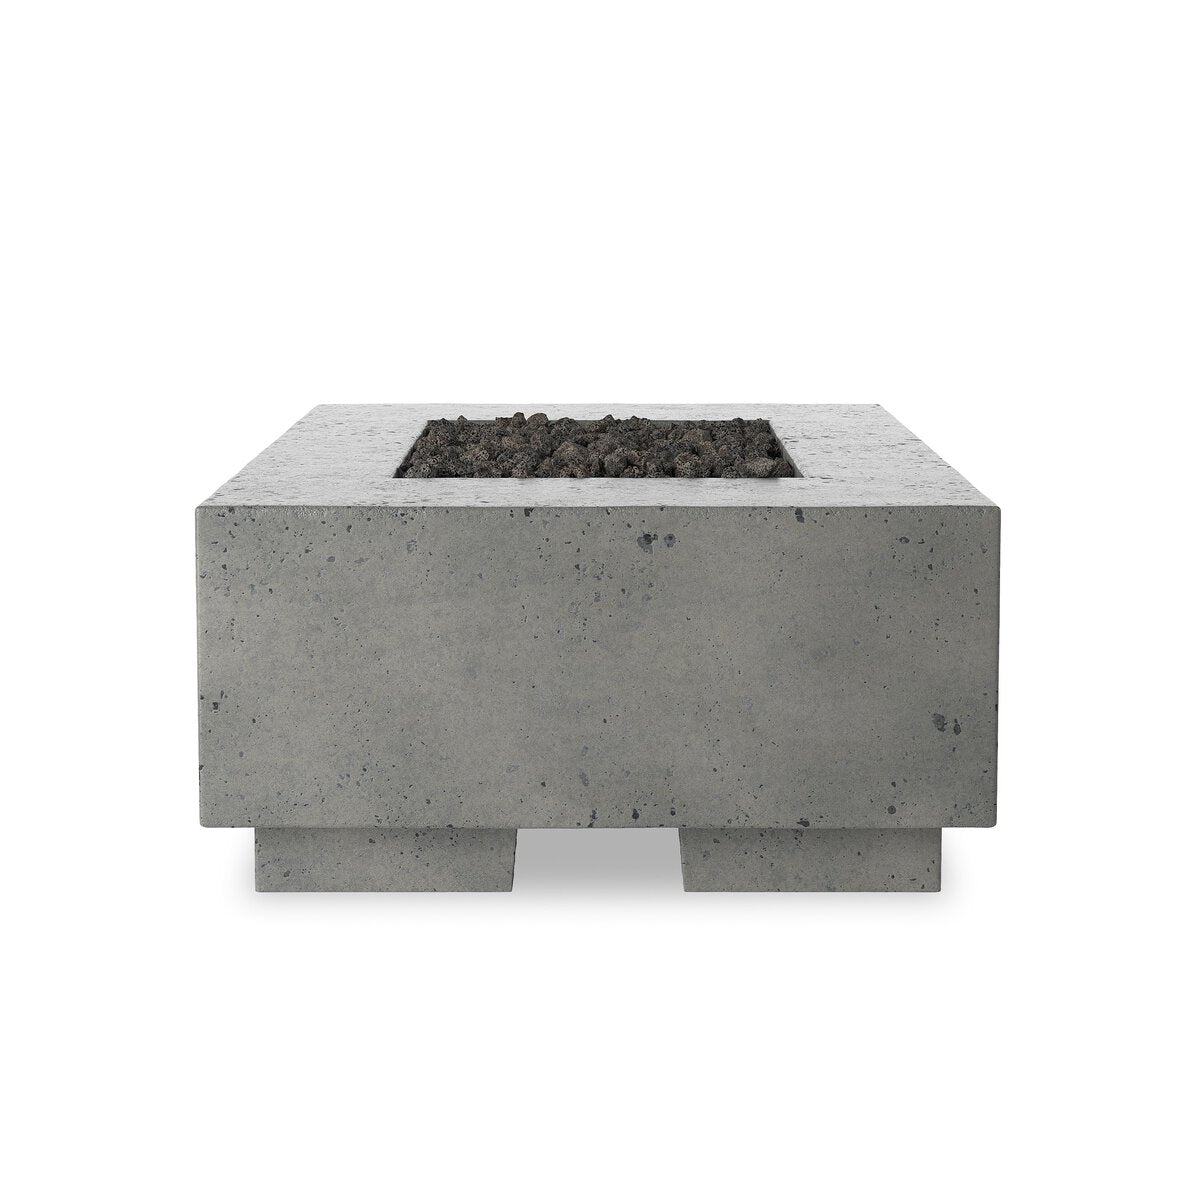 Kenton Outdoor Fire Table Pewter Concrete Propane